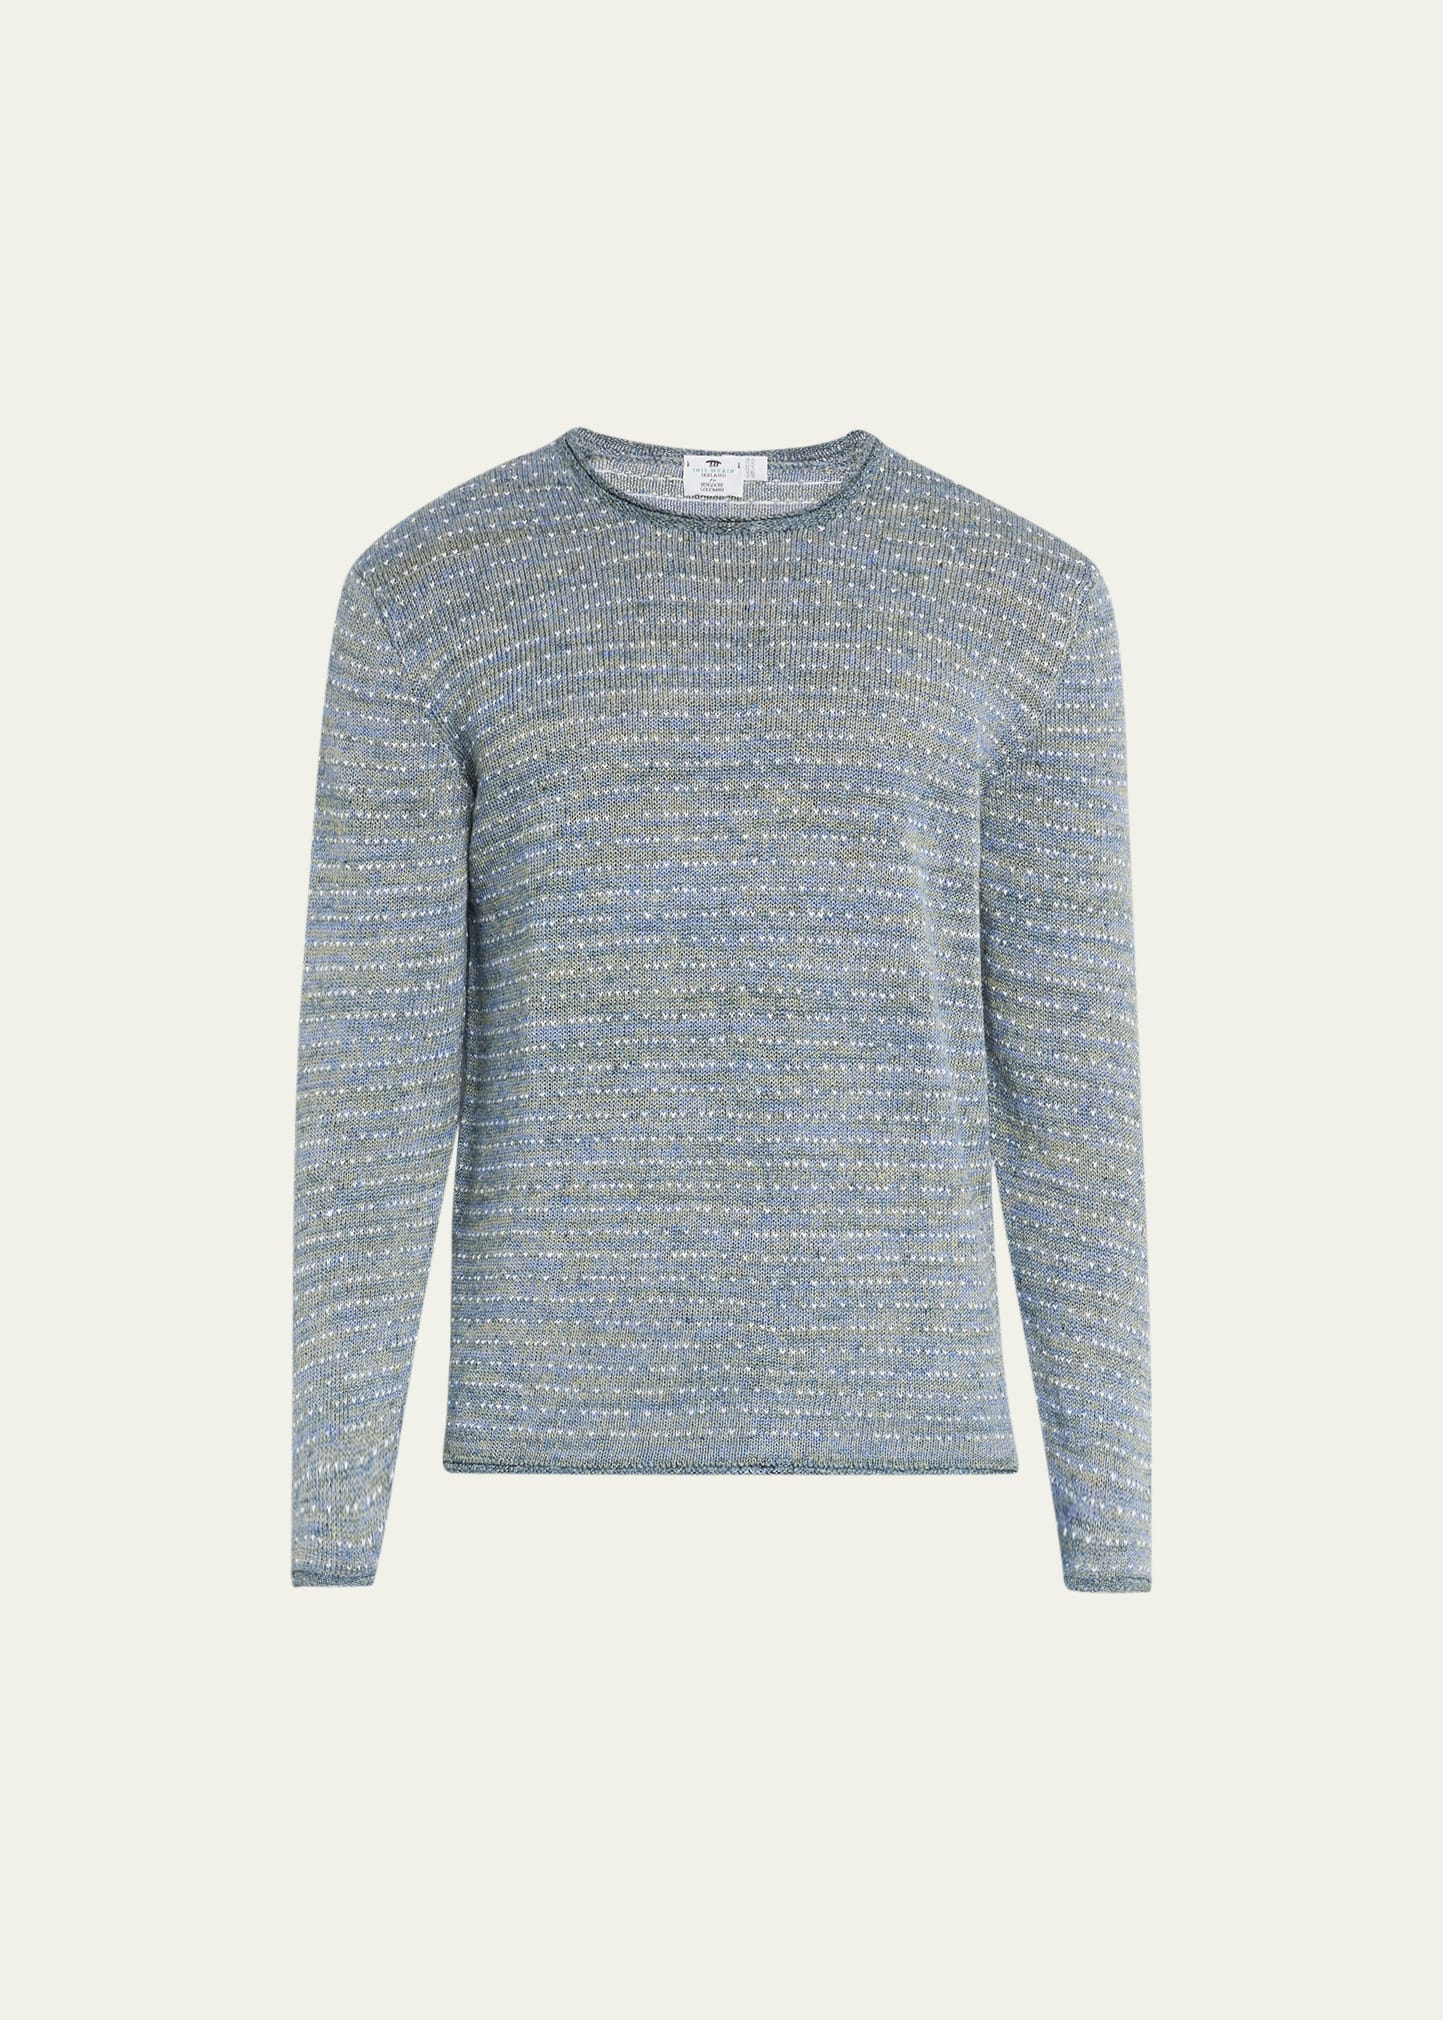 Inis Meain Men's Linen Knit Crewneck Sweater